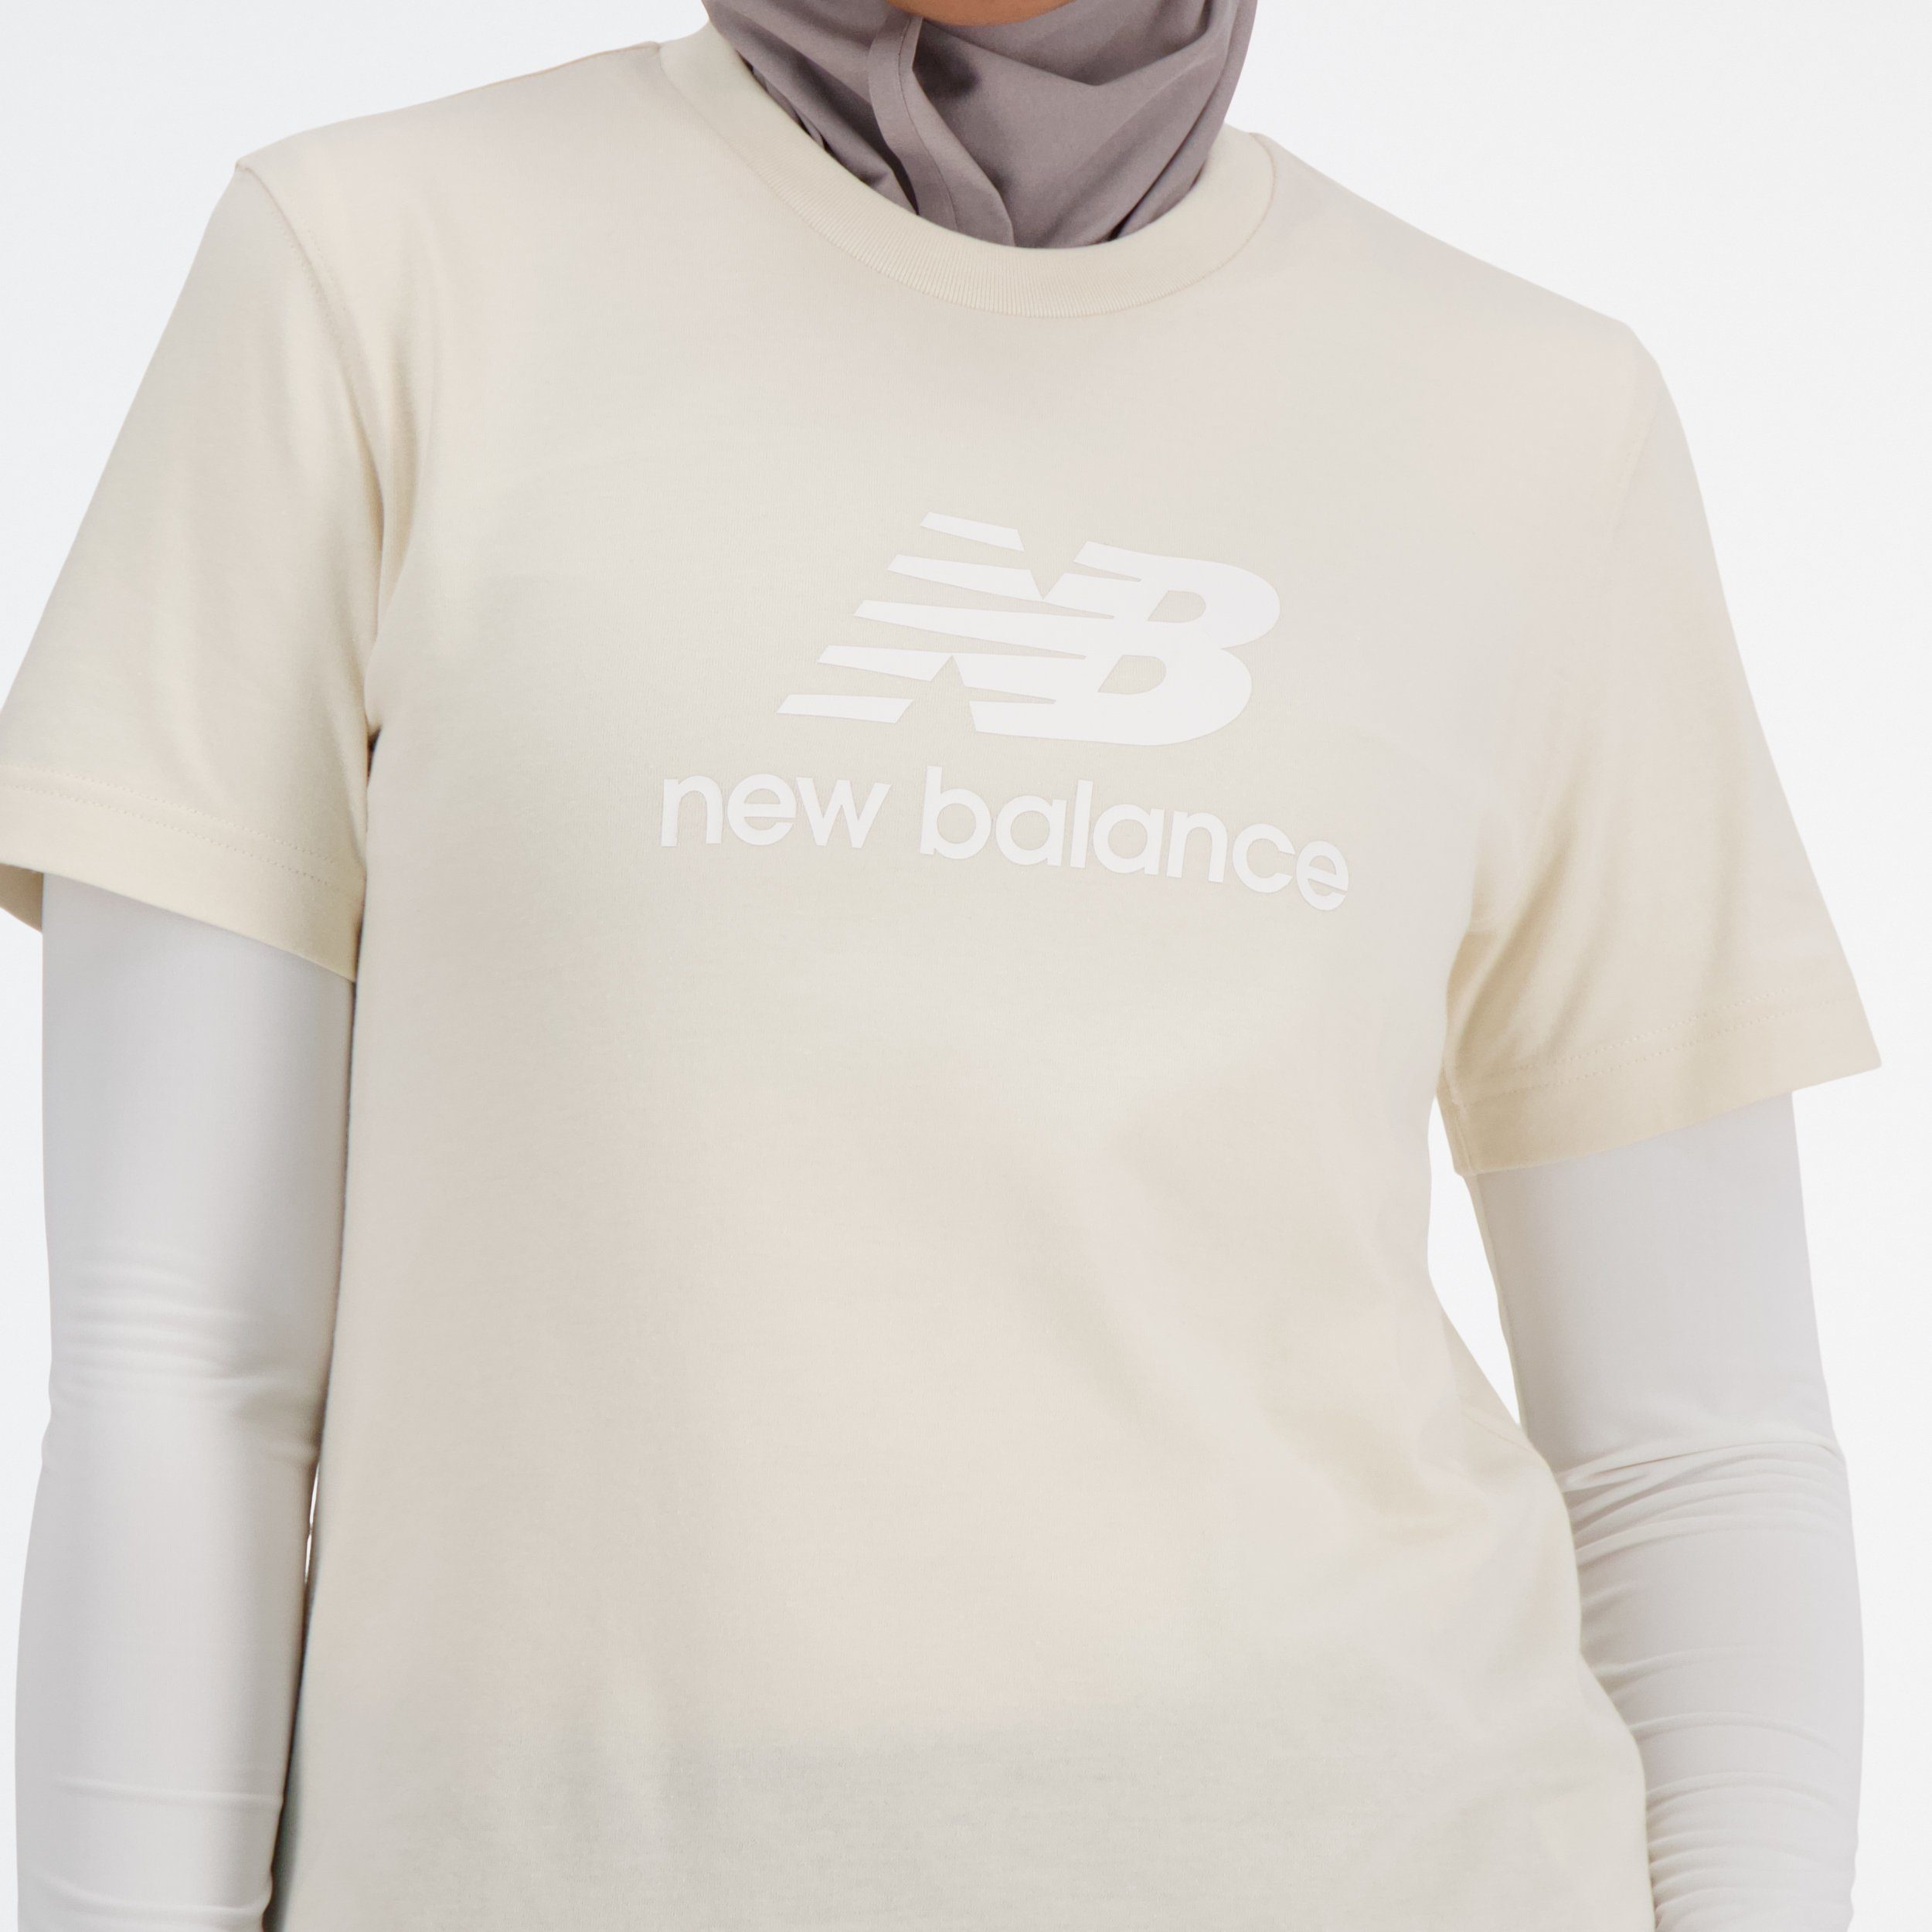 New Balance T-shirt WOMENS LIFESTYLE S S TOP